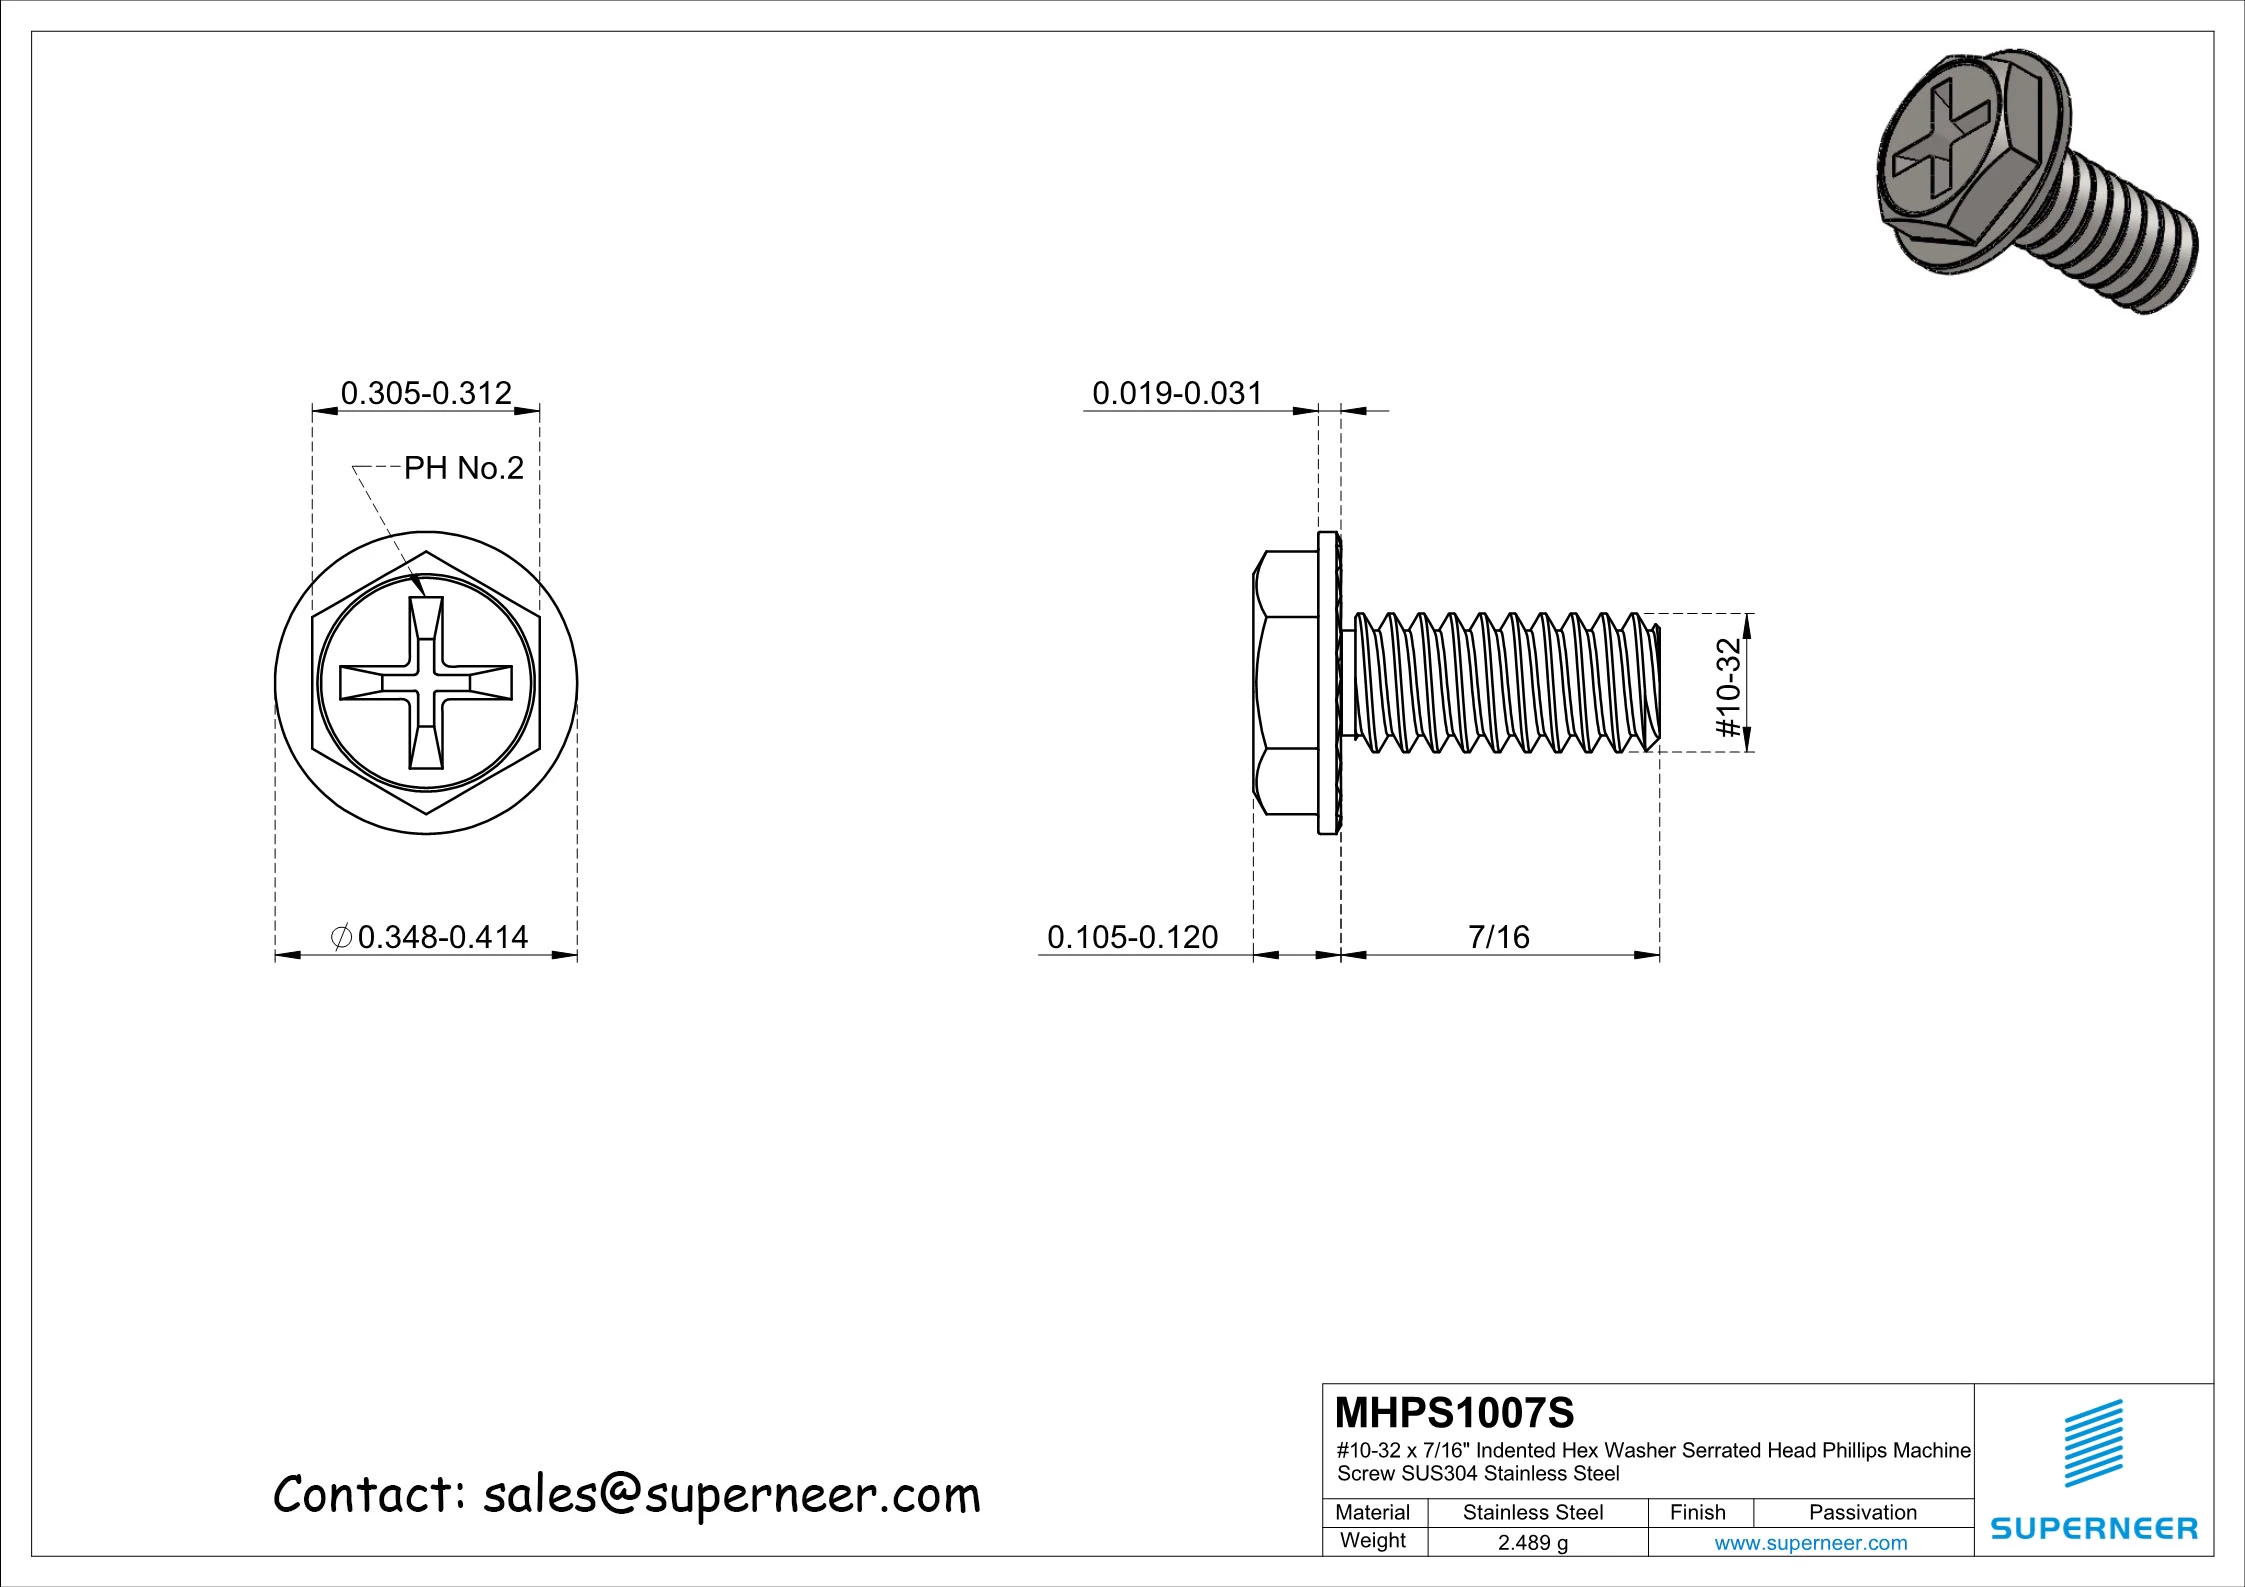 10-32 x 7/16“ Indented Hex Washer Serrated Head Phillips Machine Screw SUS304 Stainless Steel Inox